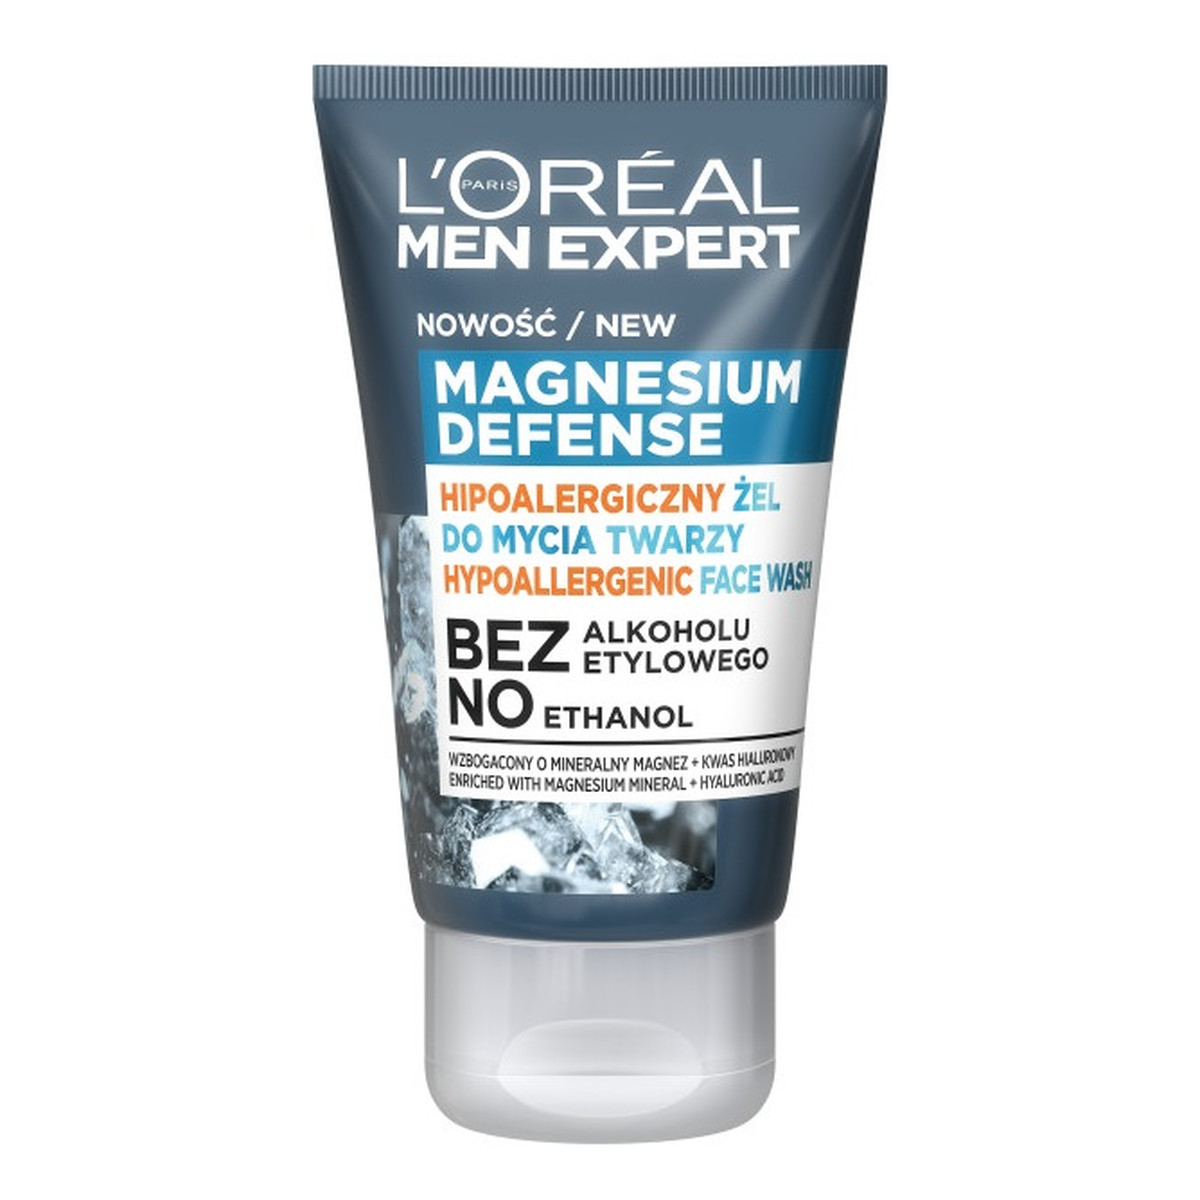 L'Oreal Paris Men Expert Magnesium Defense hipoalergiczny Żel do mycia twarzy 100ml